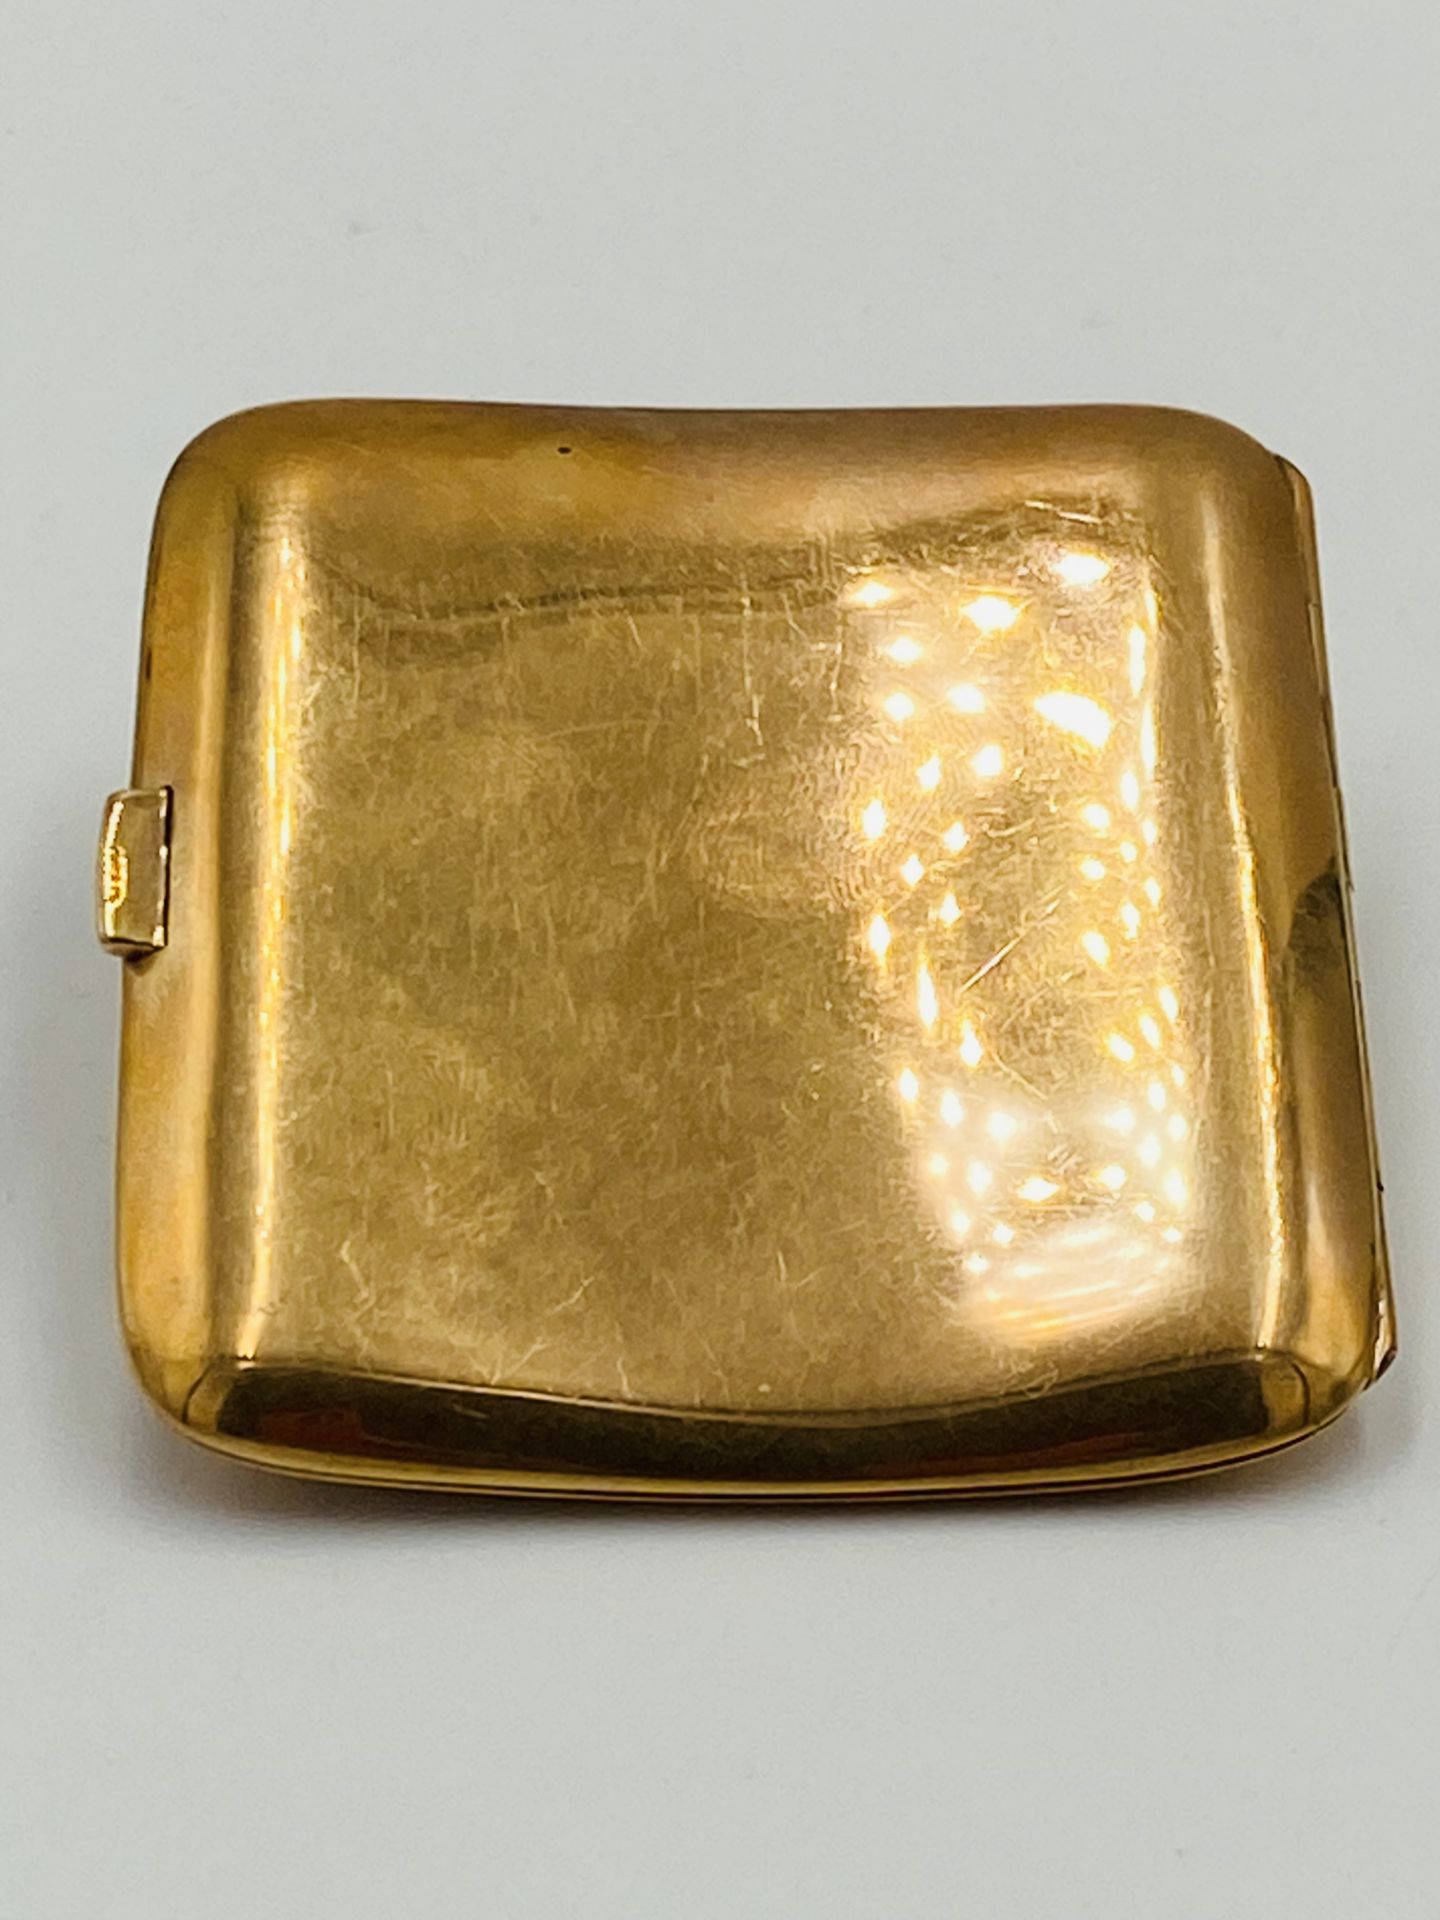 9ct gold cigarette case, 71.3g - Image 2 of 7